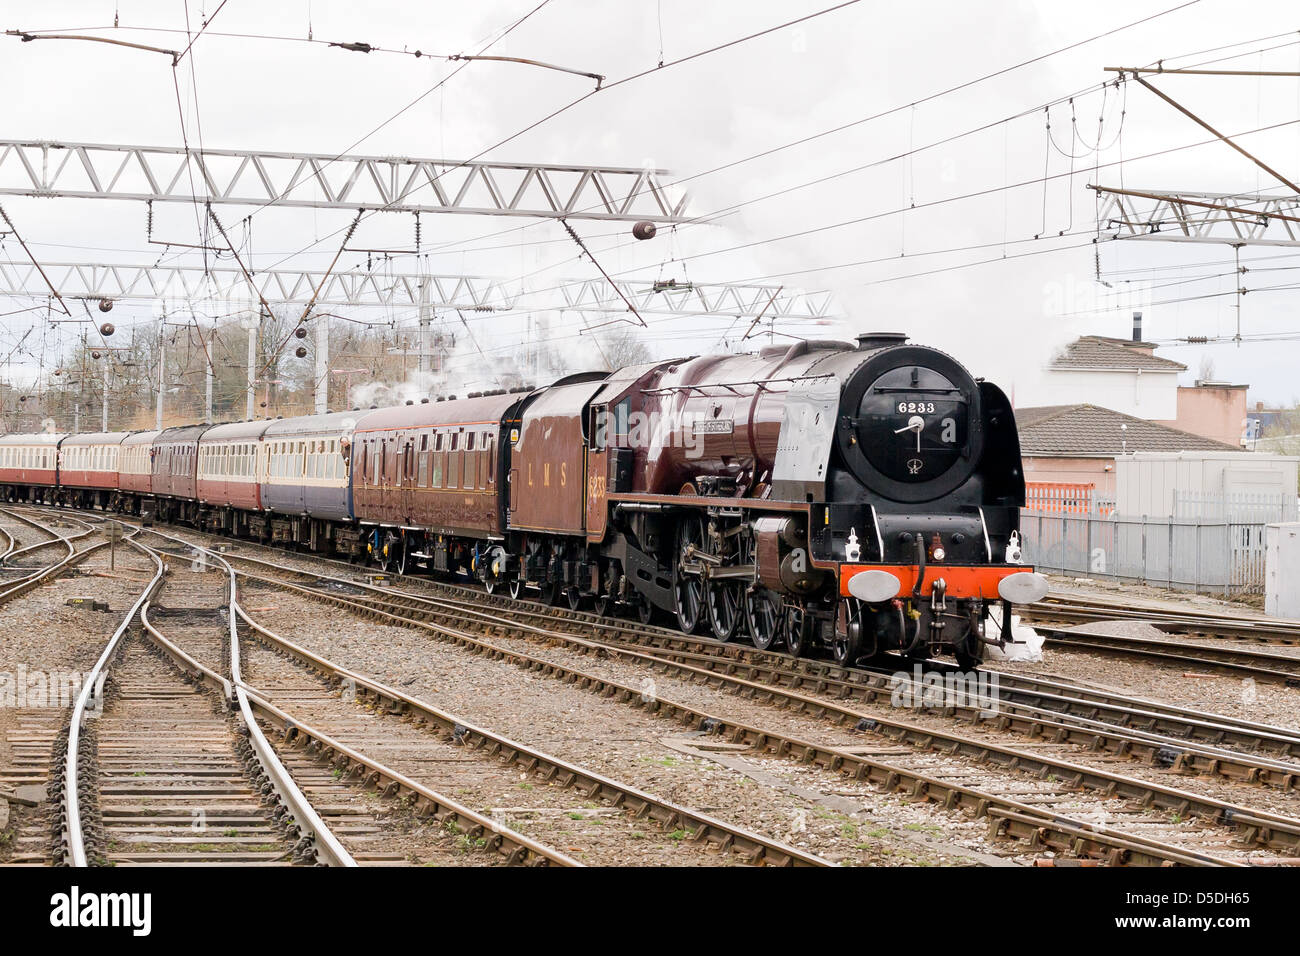 A steam locomotive pulling a passenger train on the main line near Carlisle, England Stock Photo